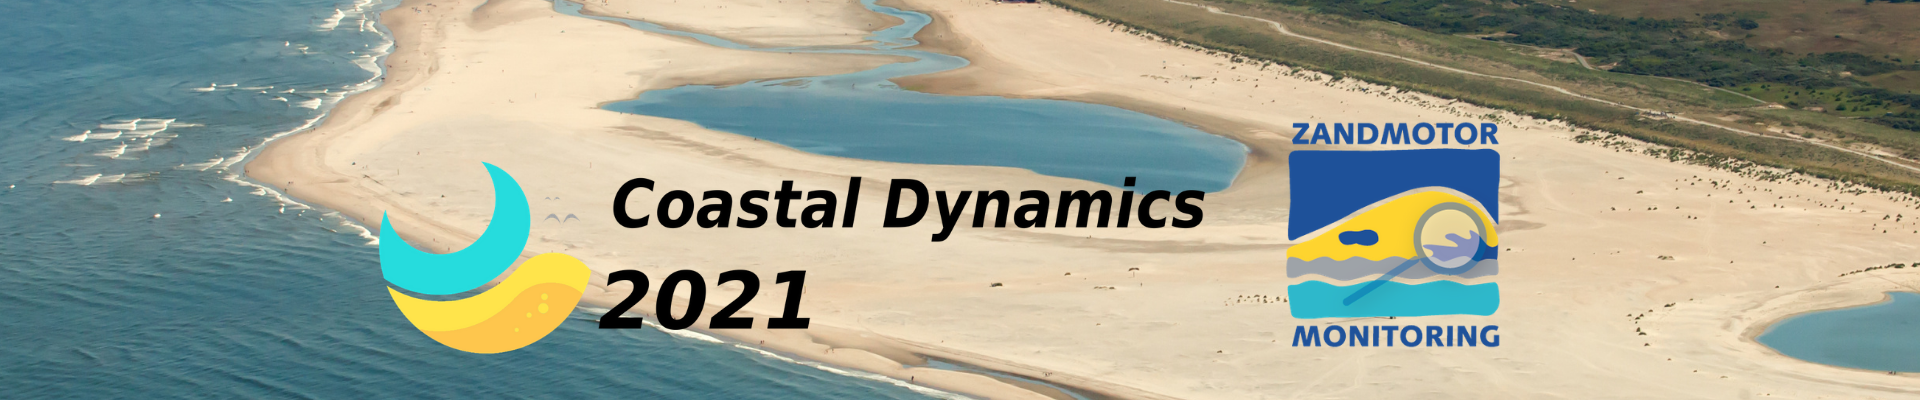 Coastal Dynamics 2021